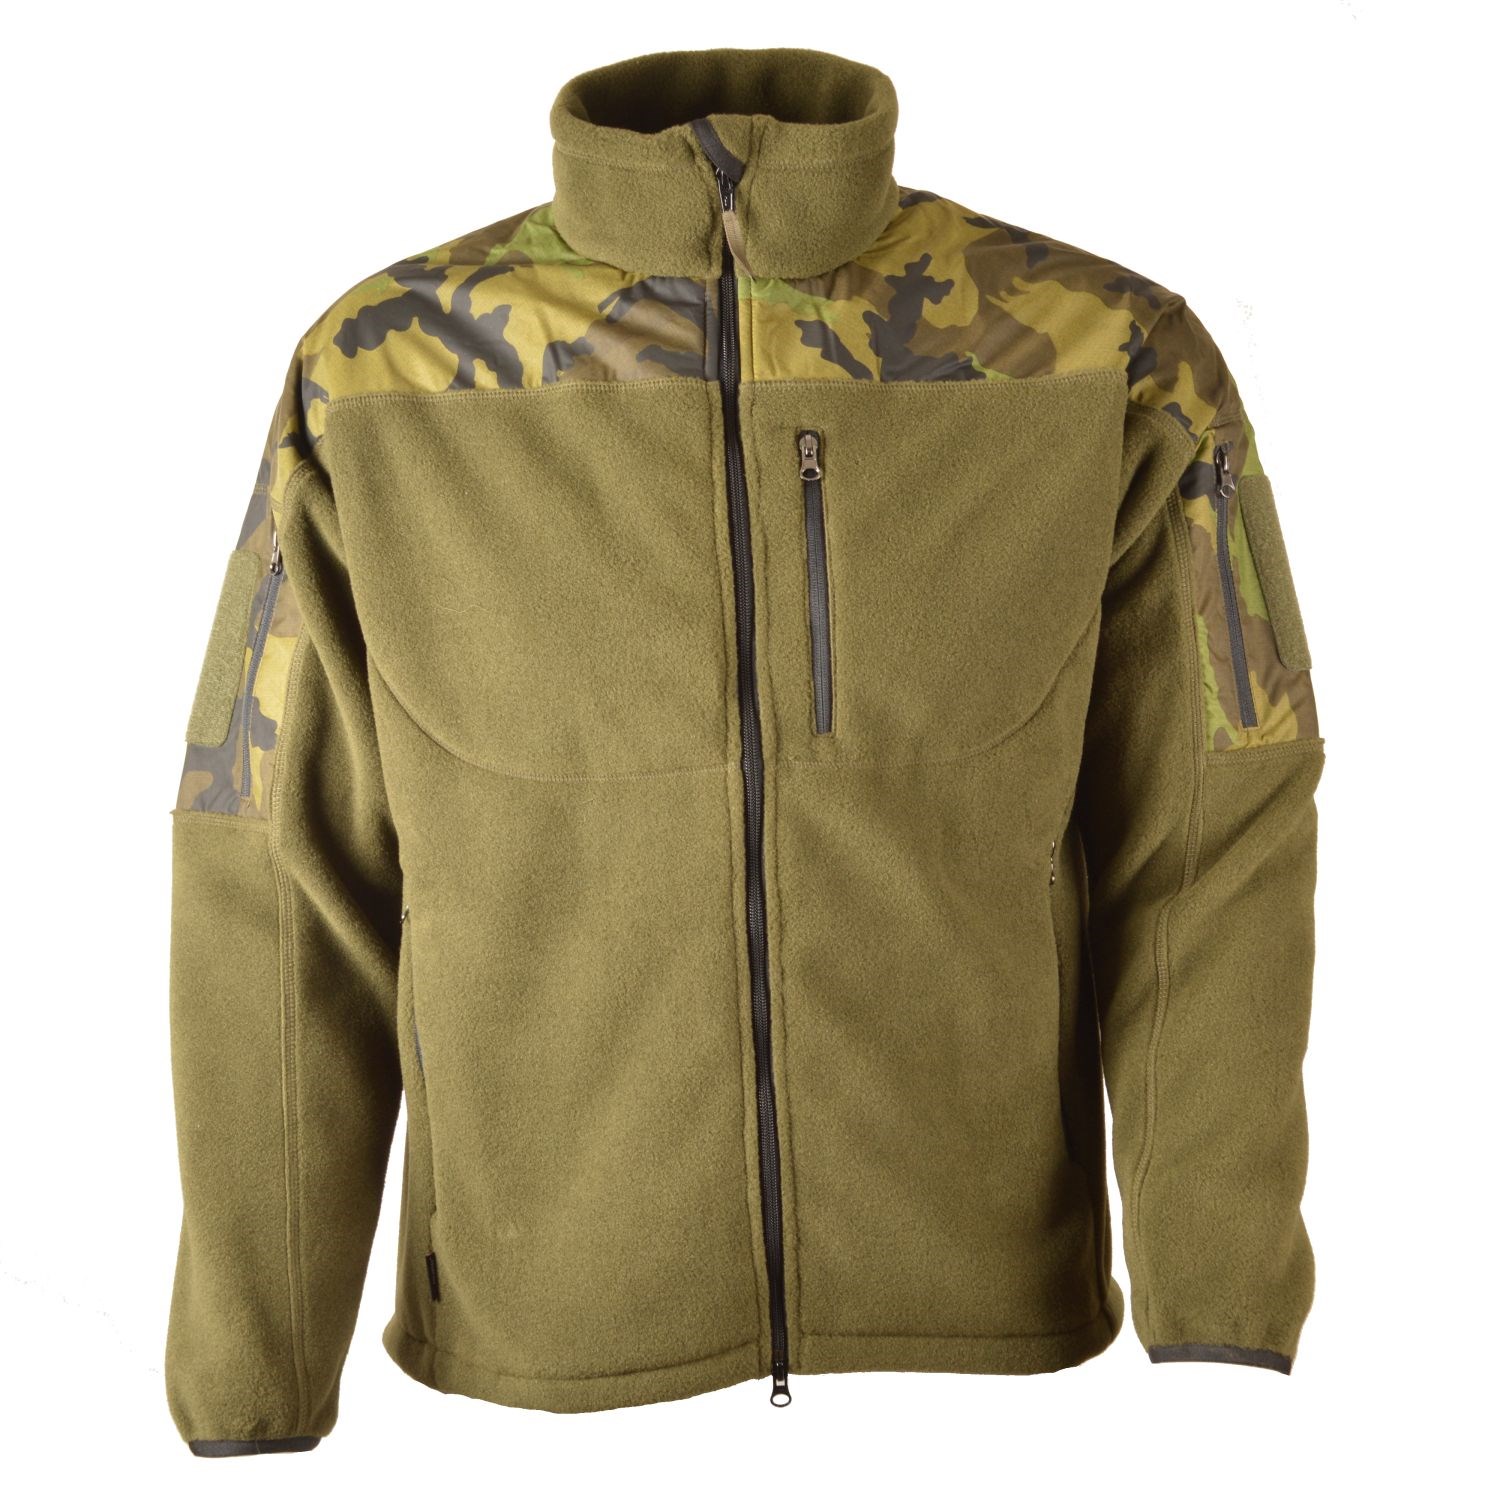 RAVEN fleece jacket with shoulders czech 95 FENIX Protector TW-132-CW L-11